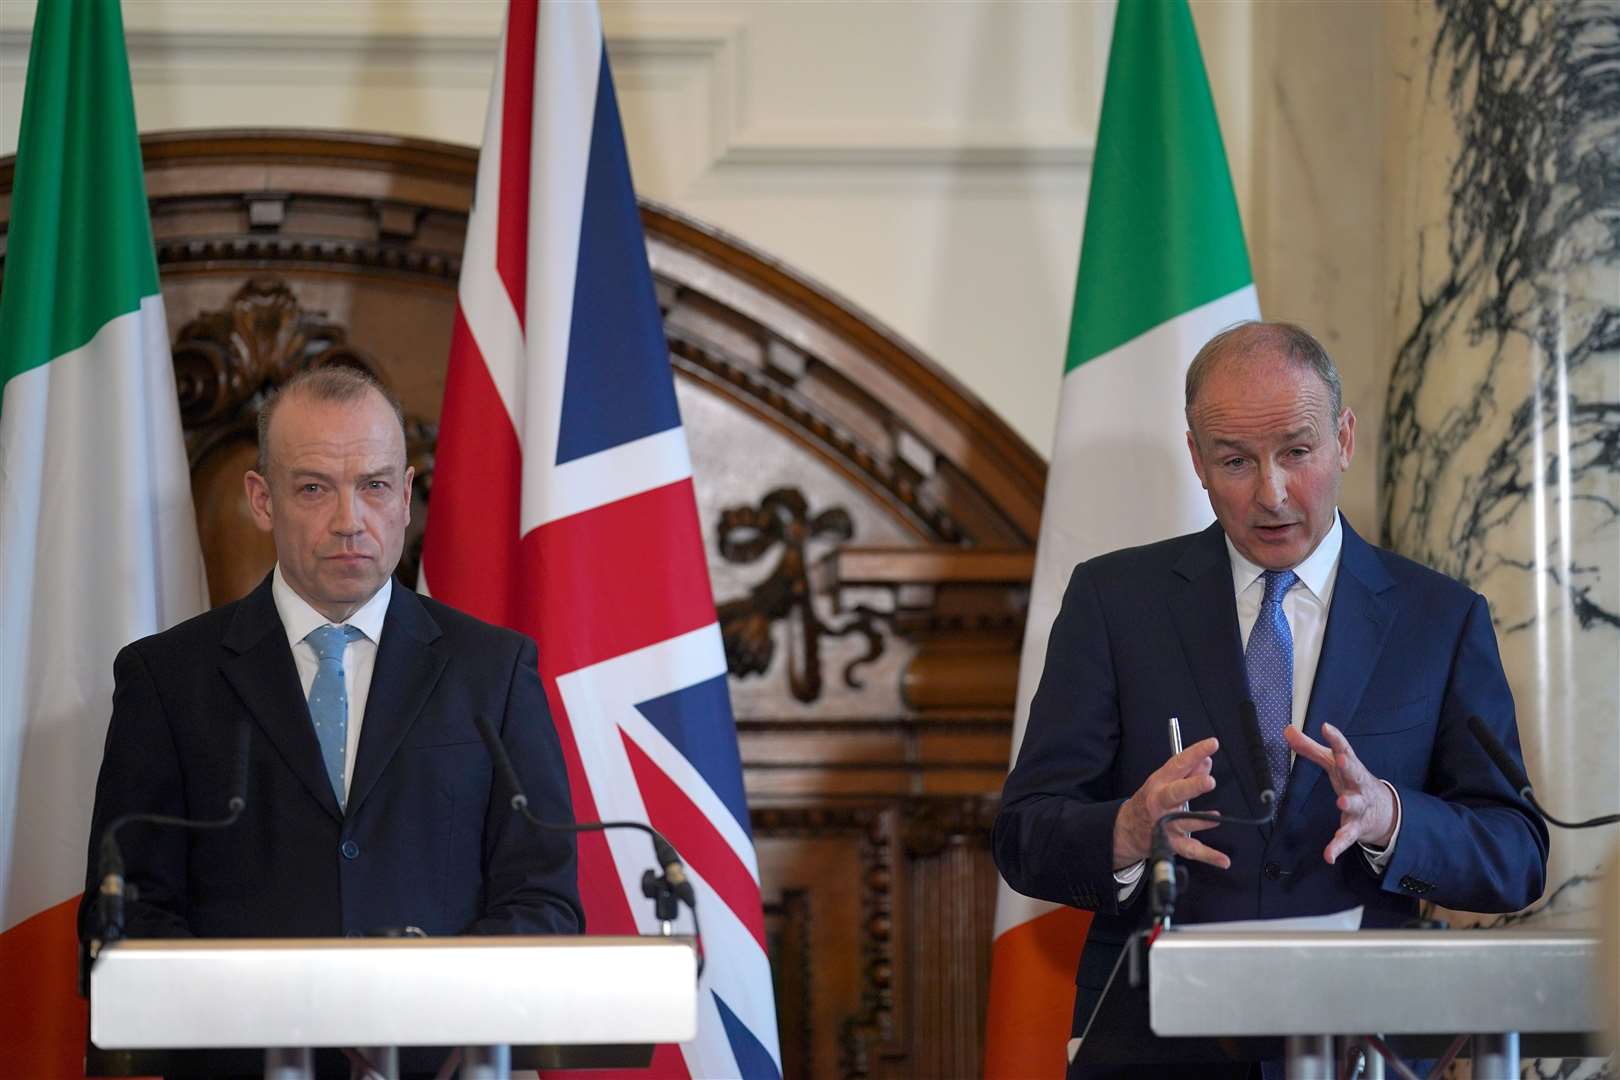 Northern Ireland Secretary Chris Heaton-Harris and Tanaiste Micheal Martin during the British-Irish Intergovernmental Conference press conference in London (Yui Mok/PA)